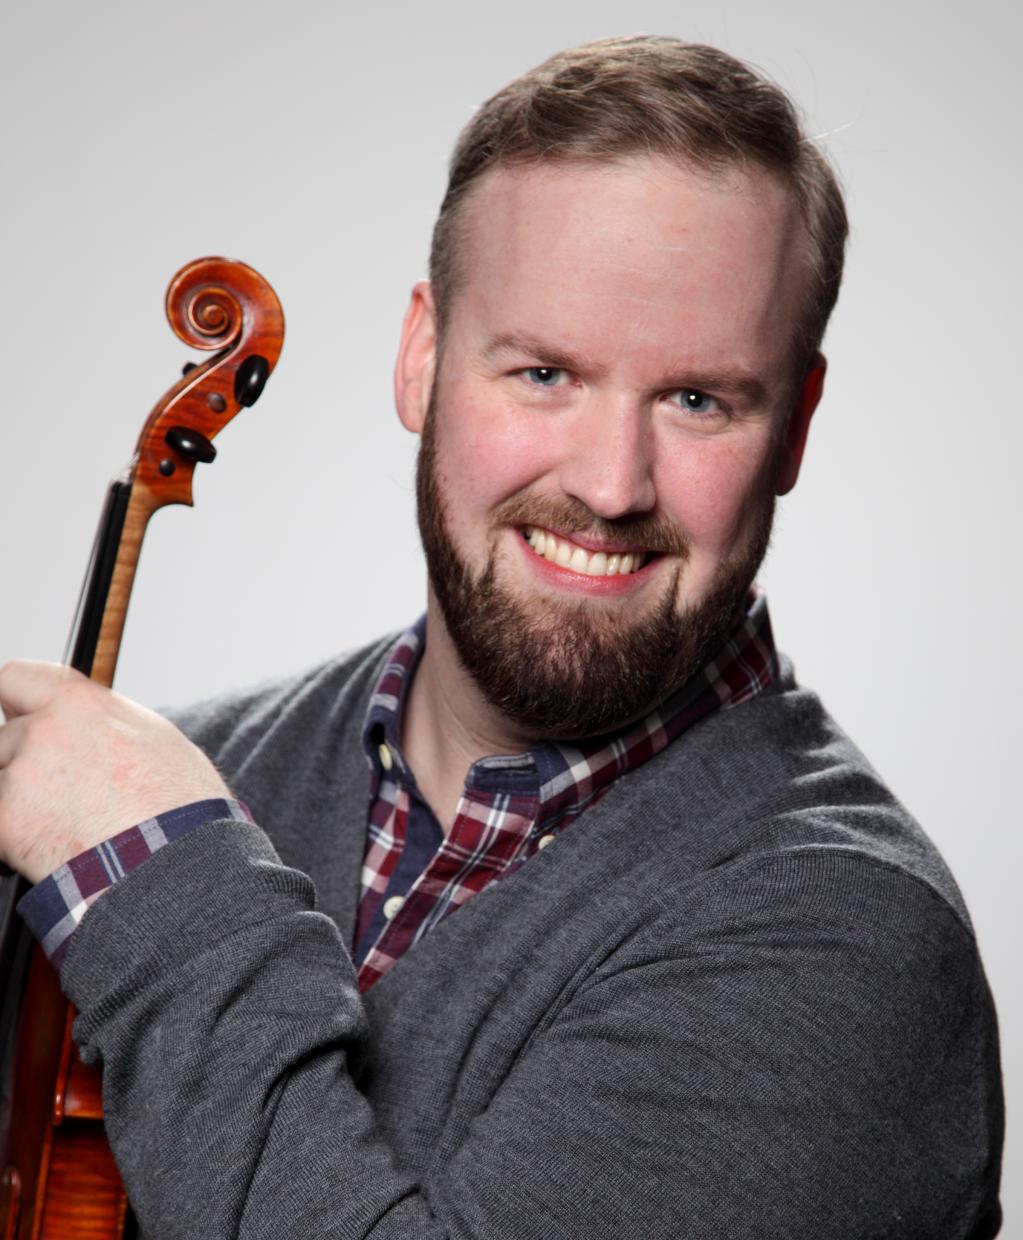 Music Institute's Violin and Viola Faculty member, John Glew